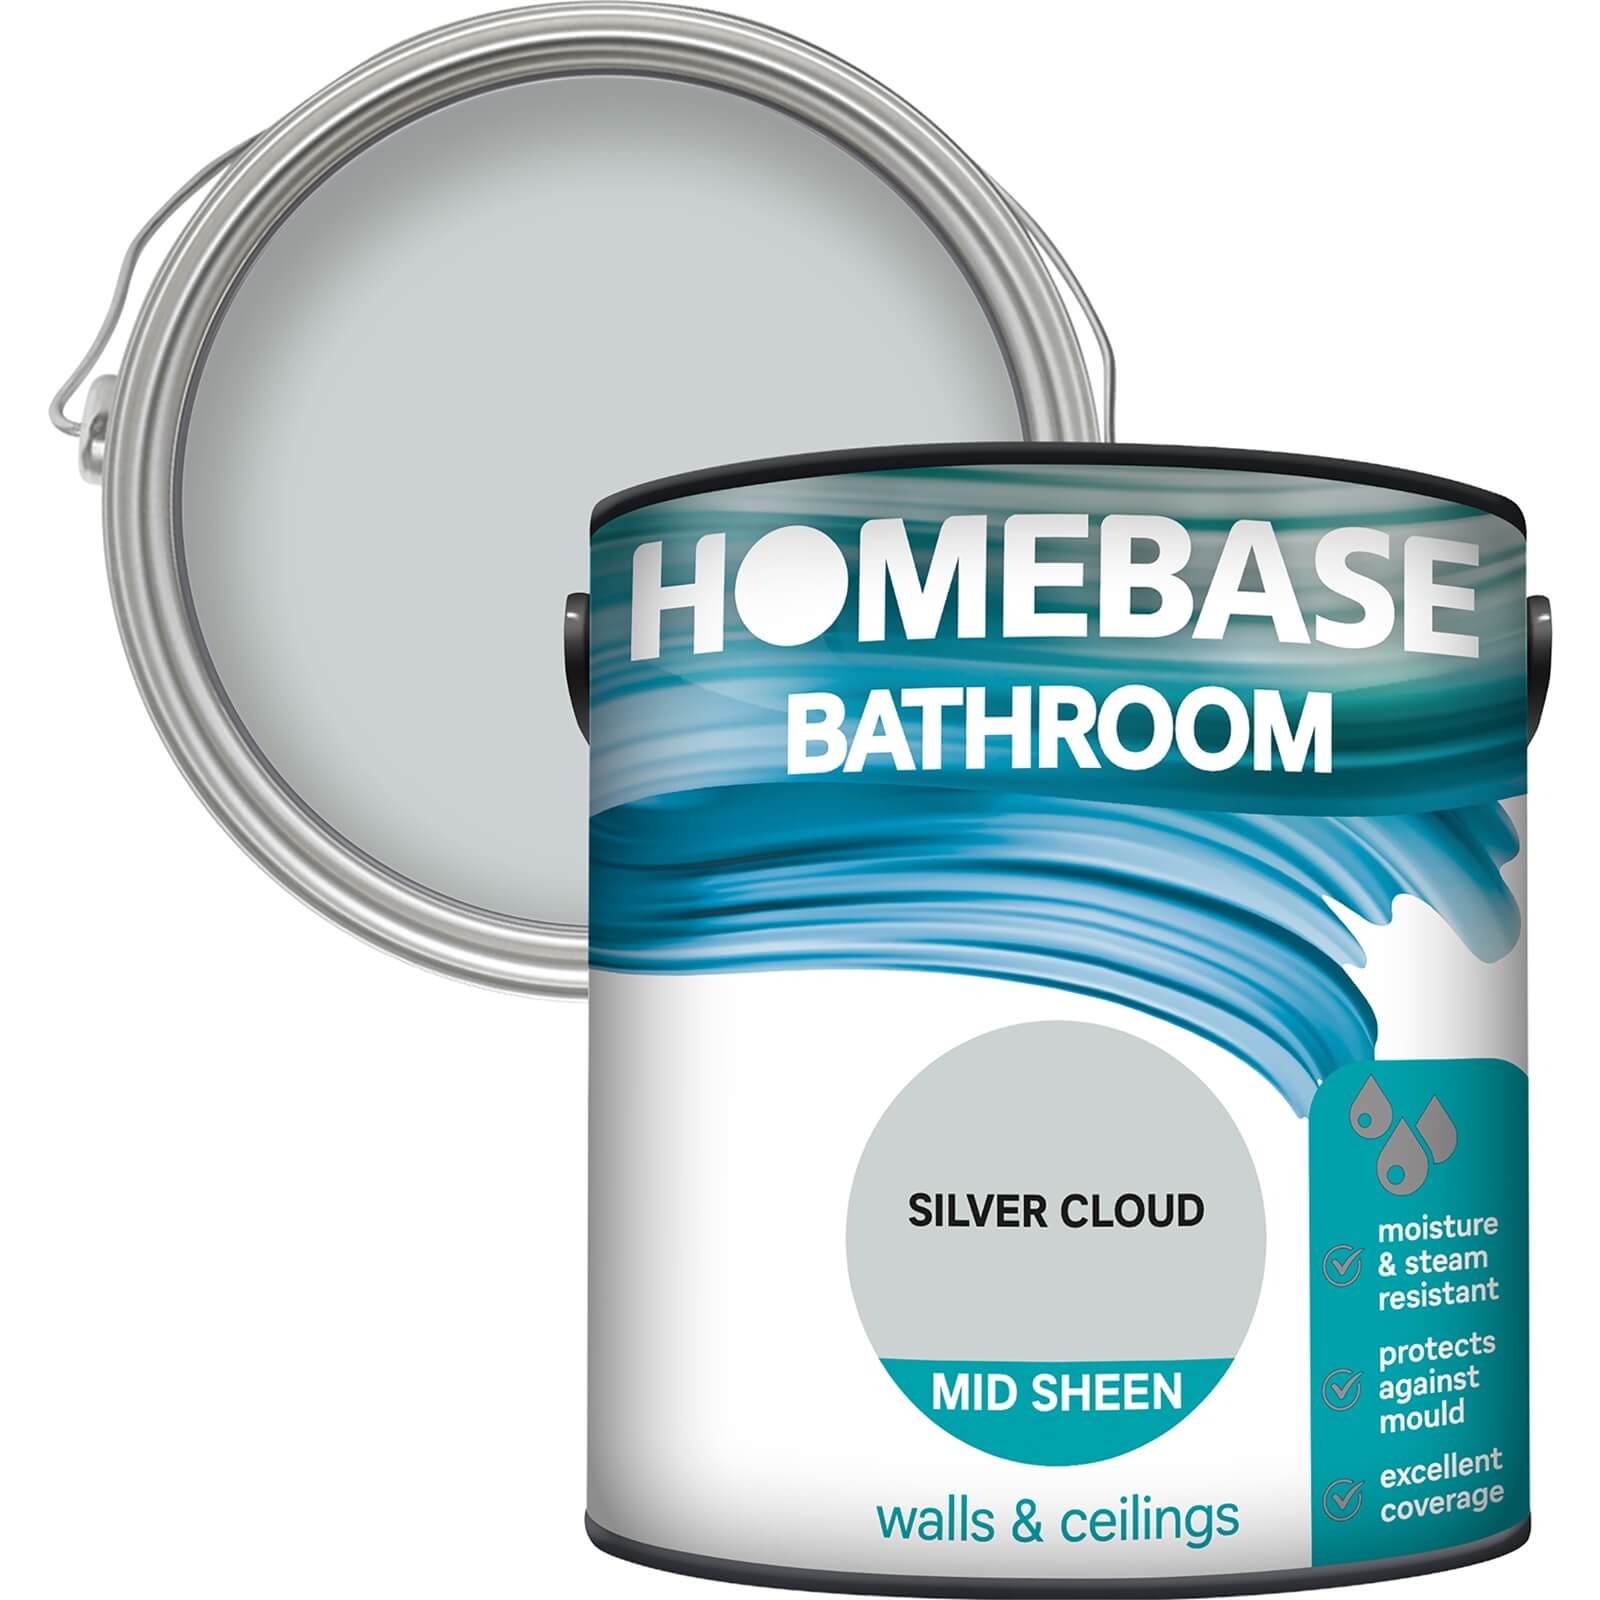 Homebase Bathroom Mid Sheen Paint - Silver Cloud 2.5L